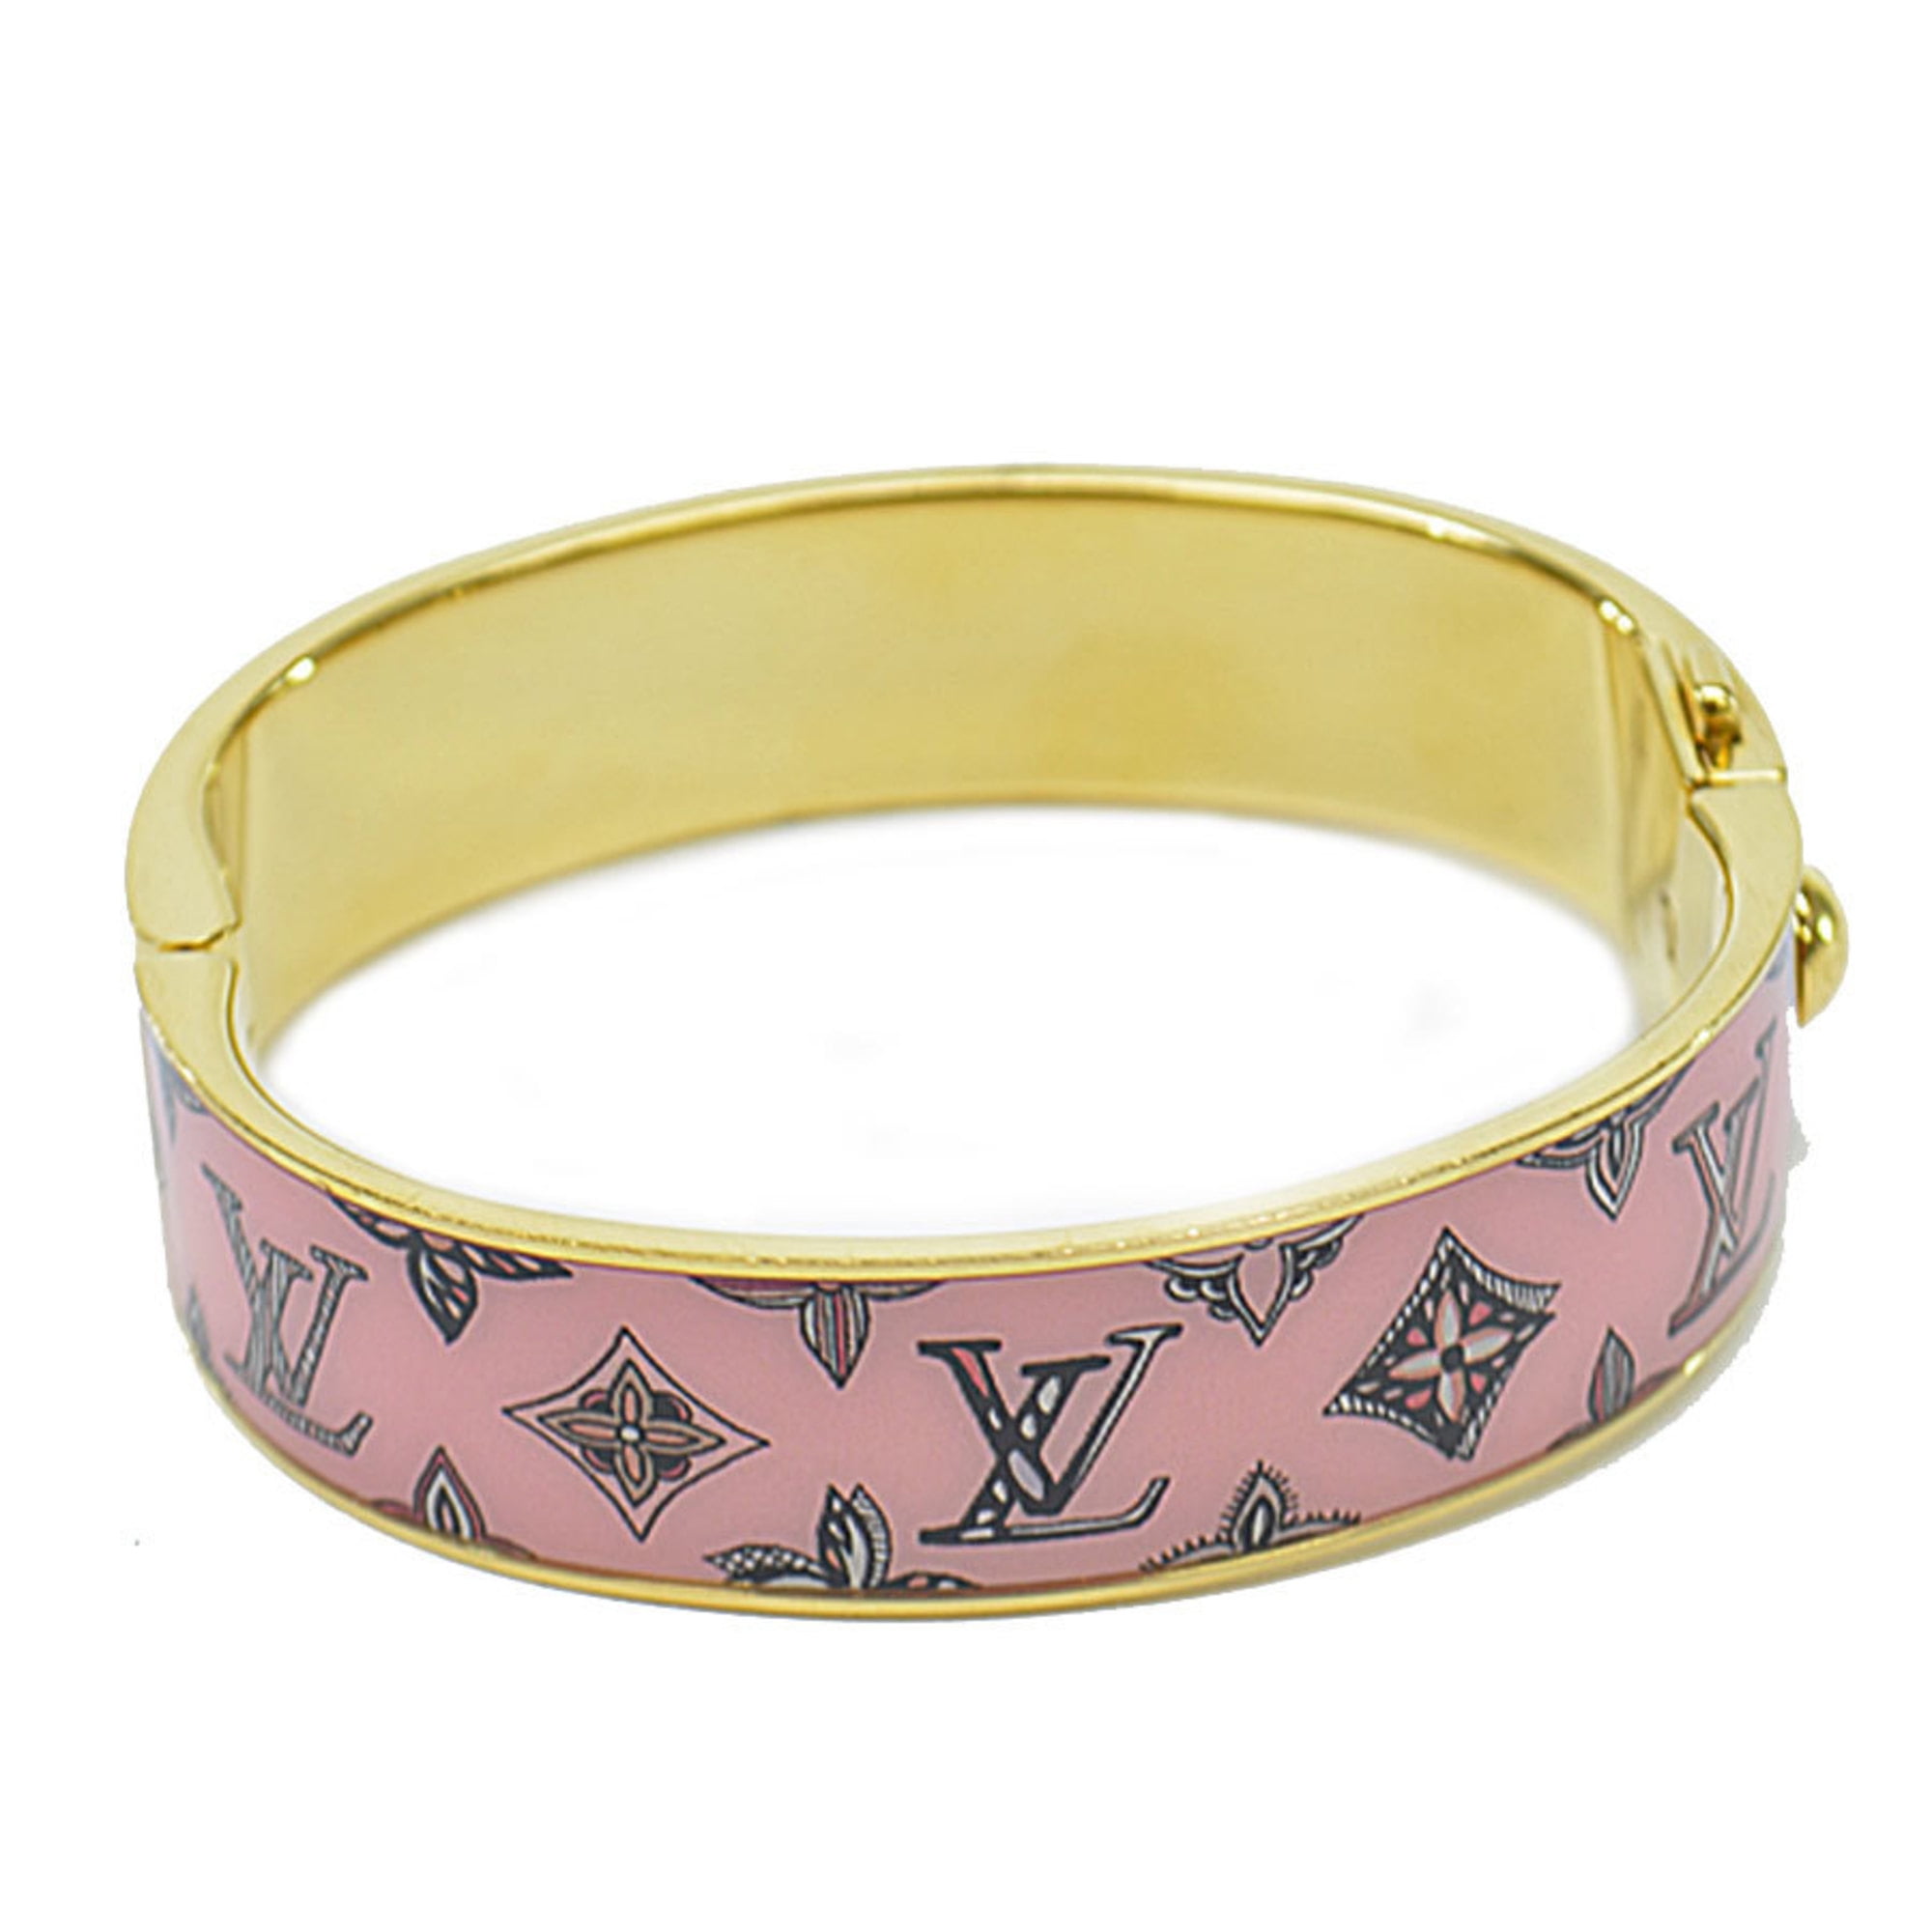 Louis Vuitton Pre-owned Women's Bracelet